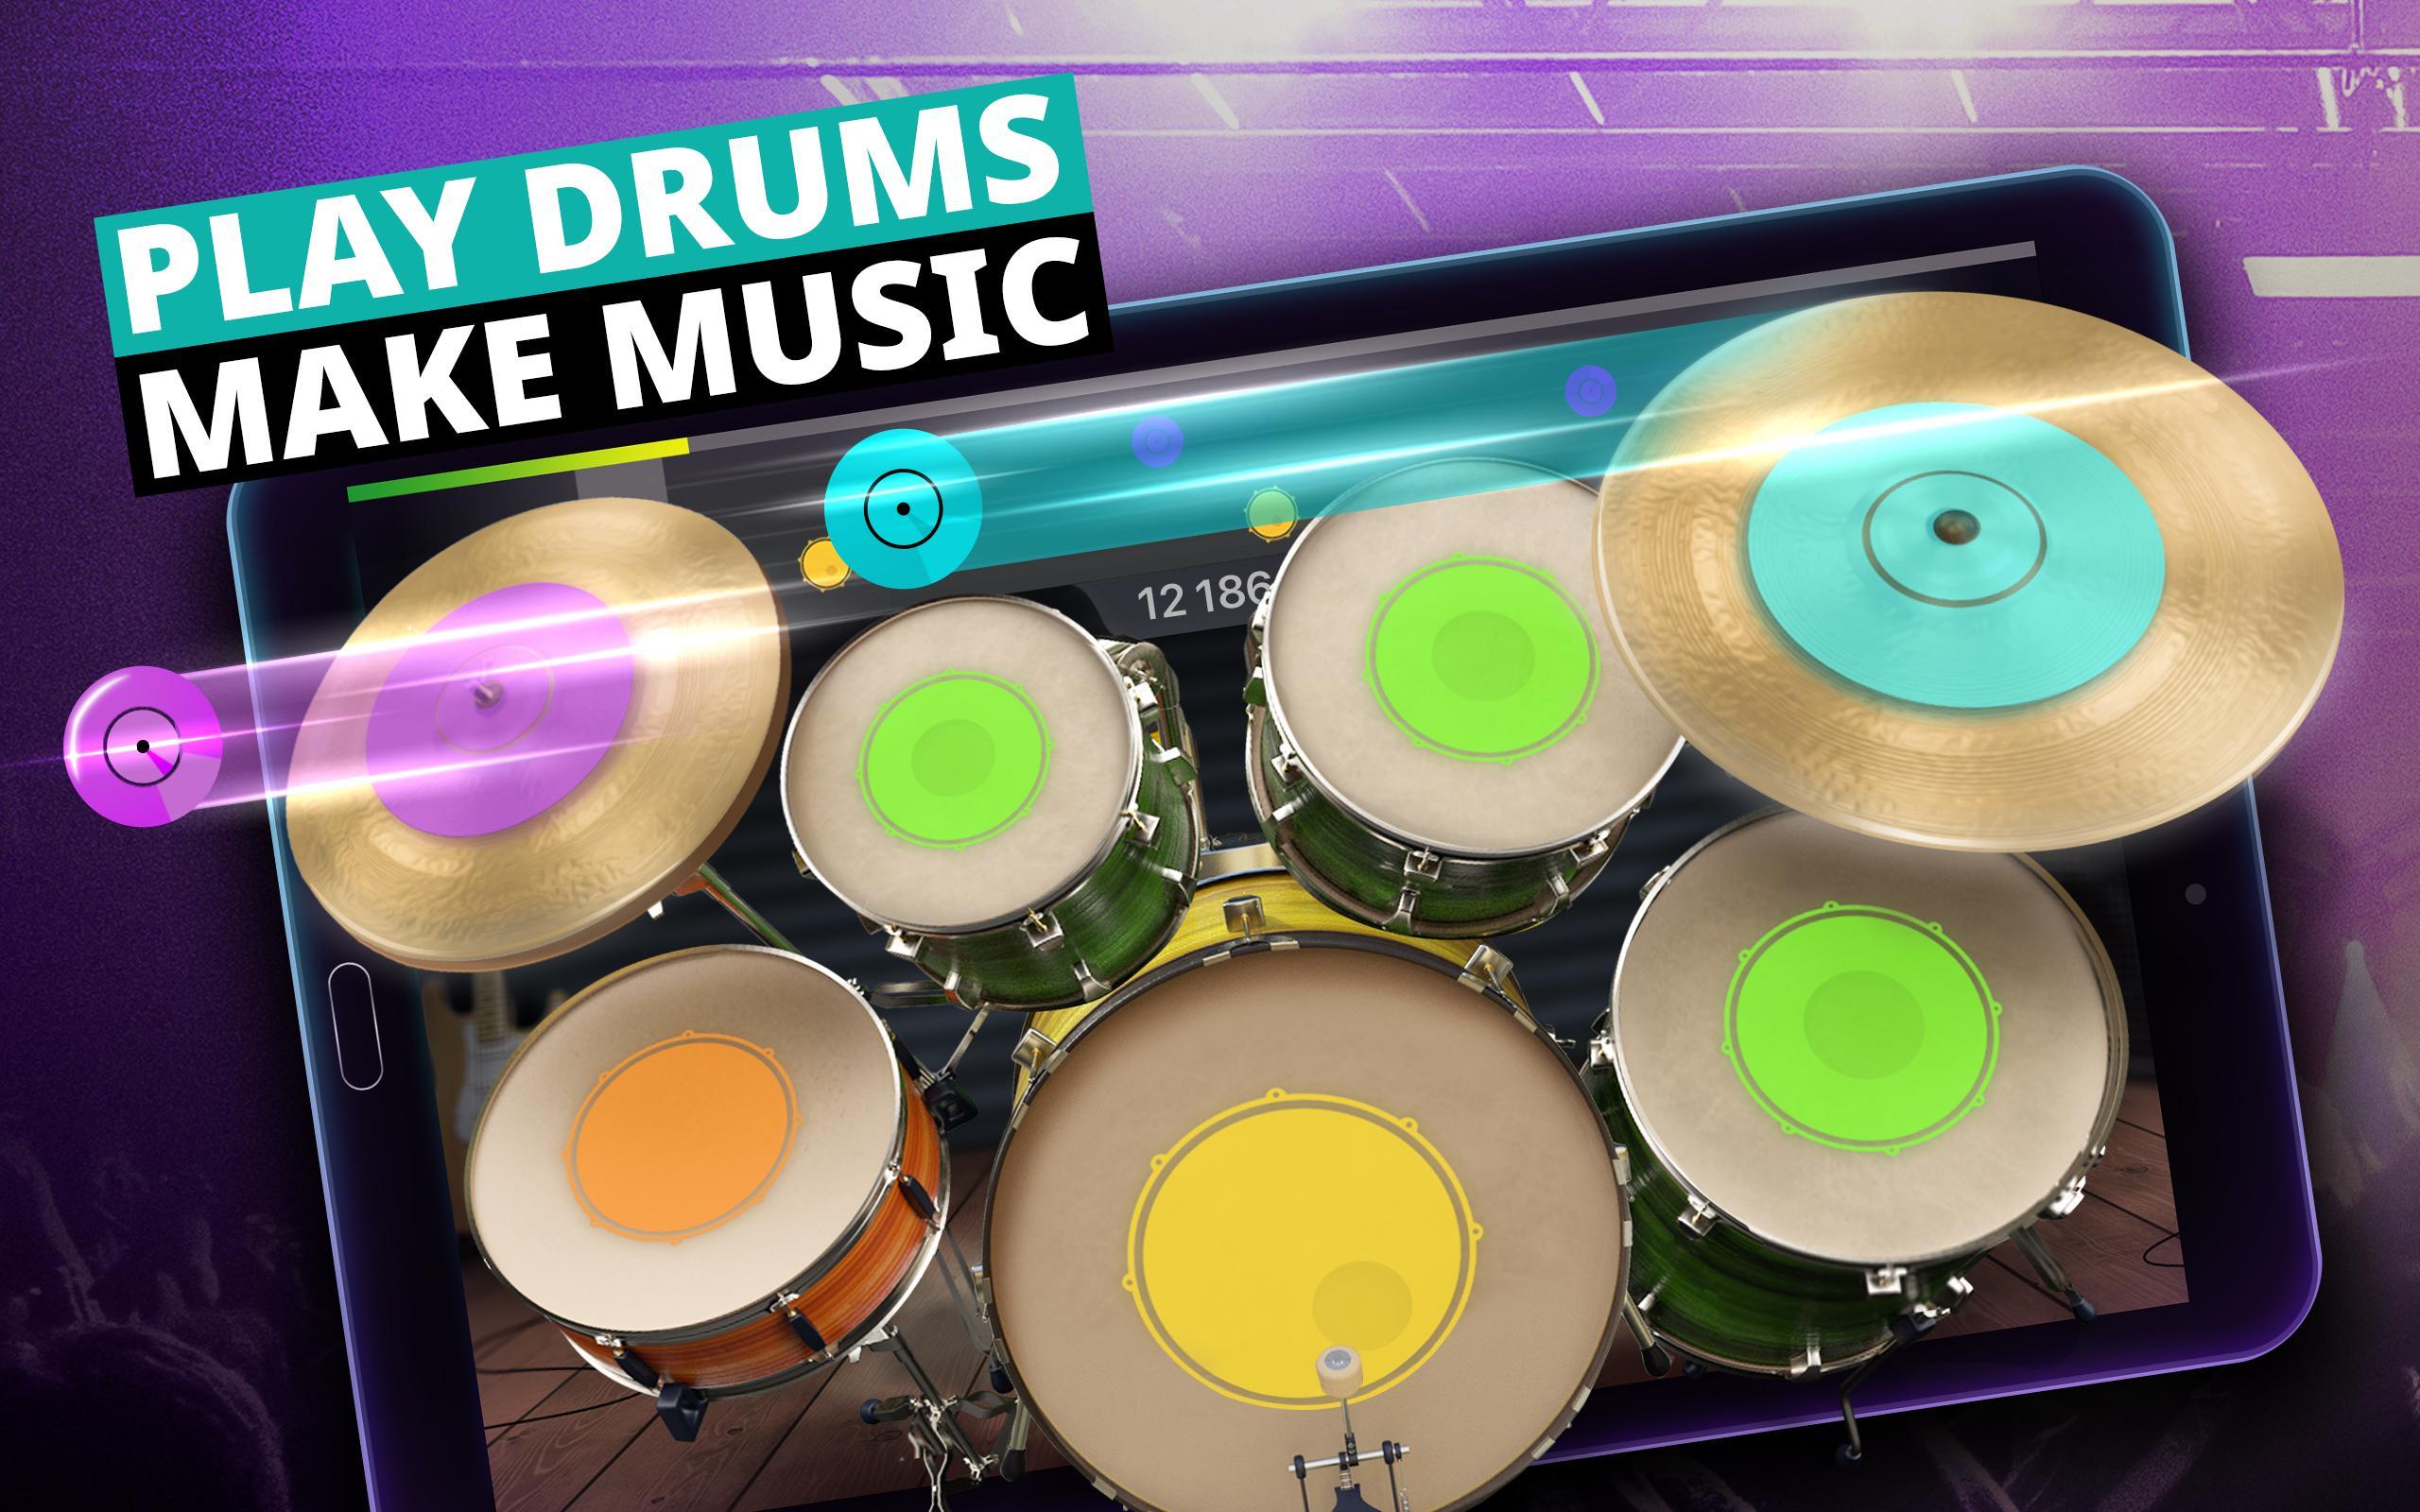 Drum Set Music Games & Drums Kit Simulator 3.36.0 Screenshot 5